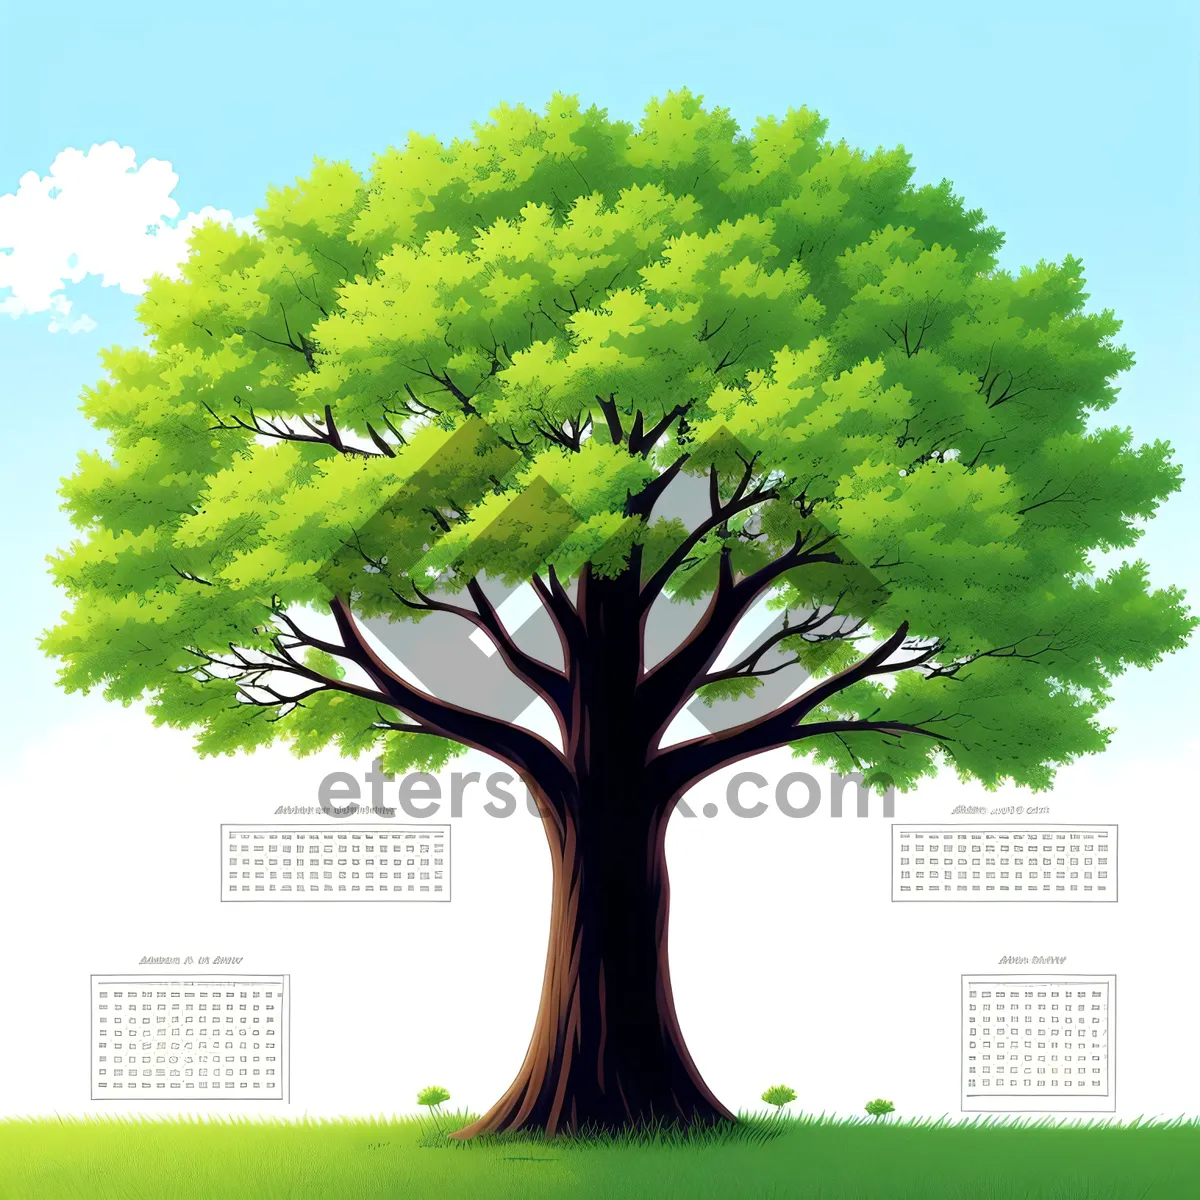 Picture of Summer Oak Tree in Forest Landscape